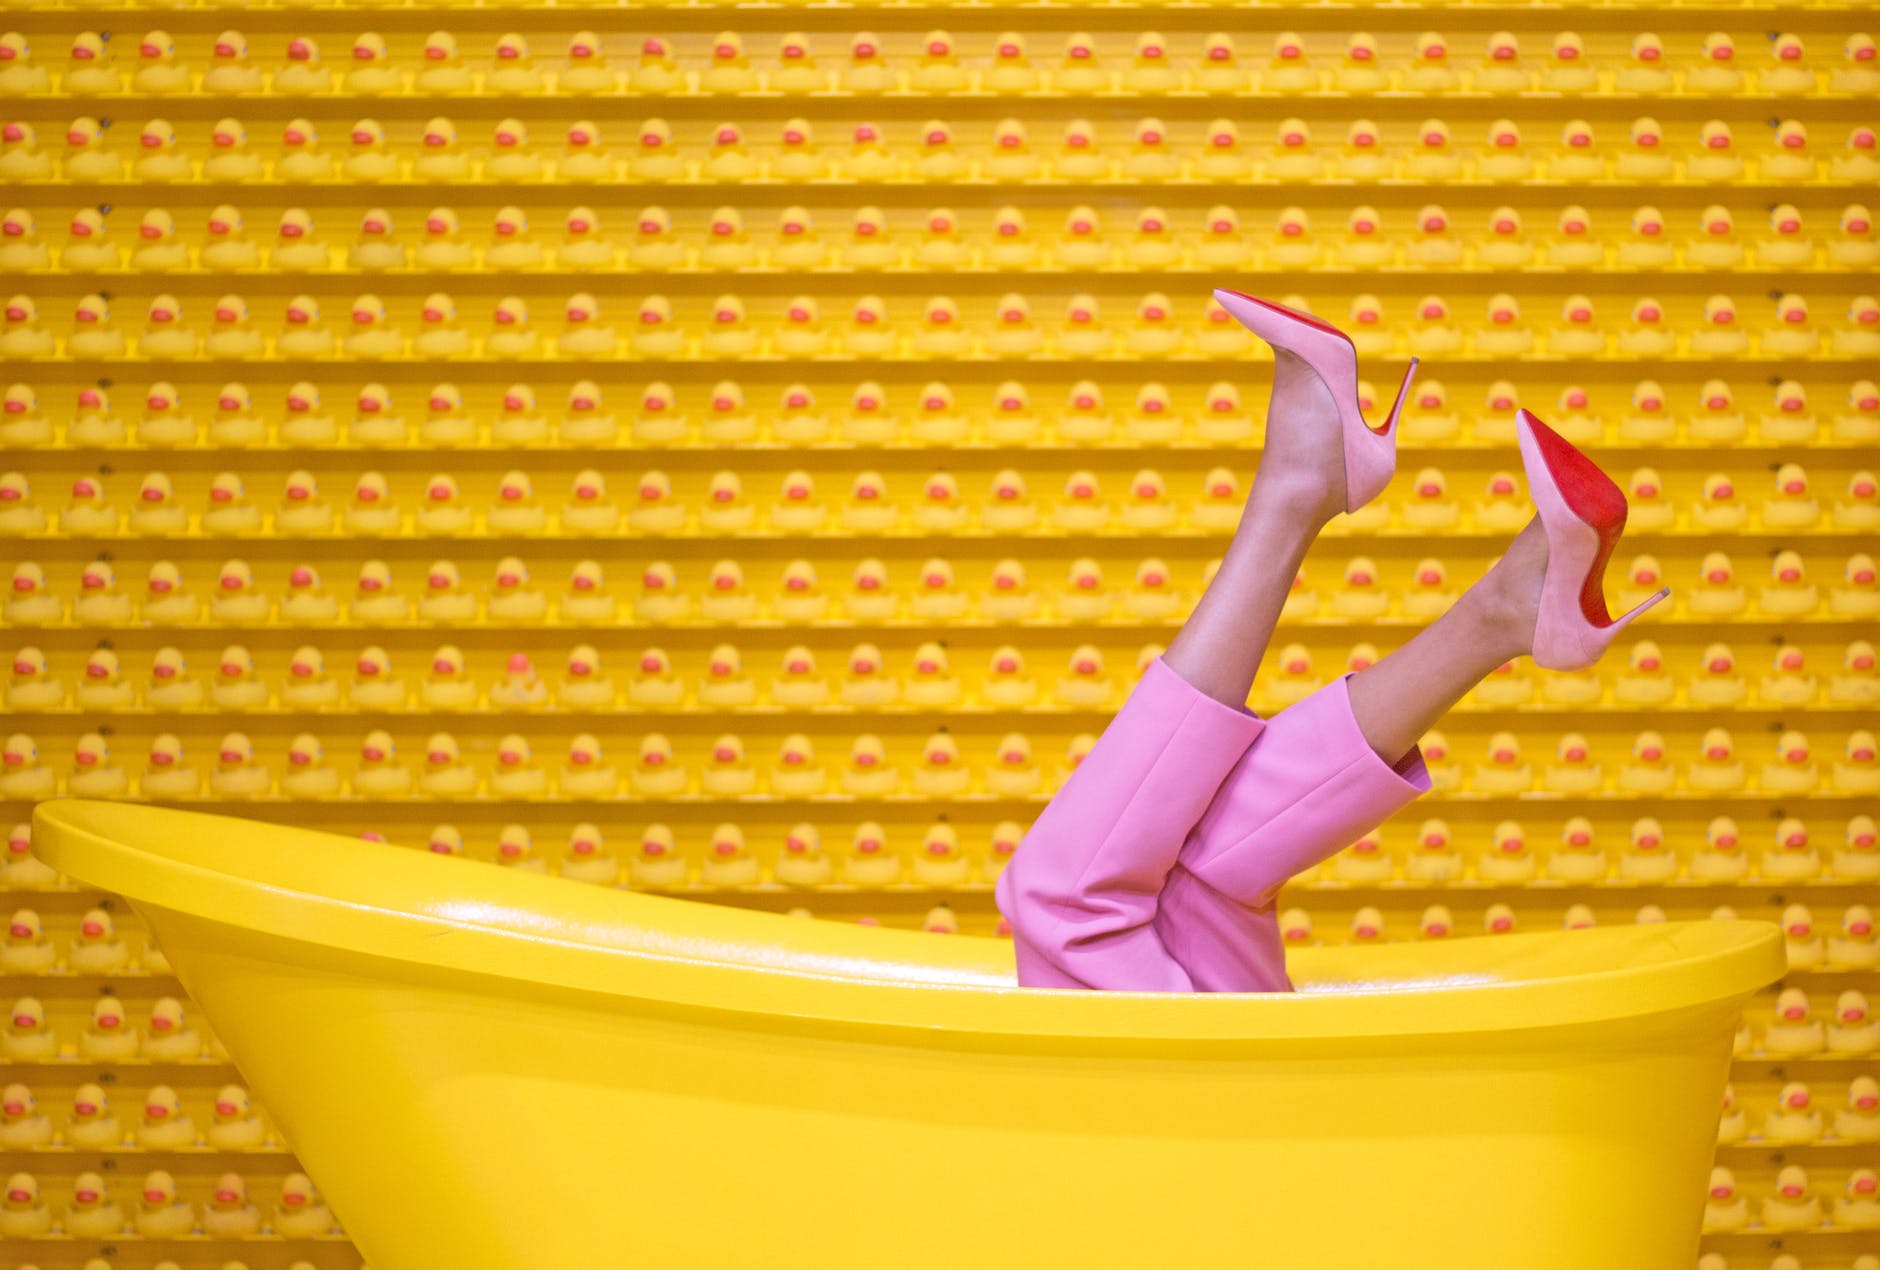 yellow steel bathtub